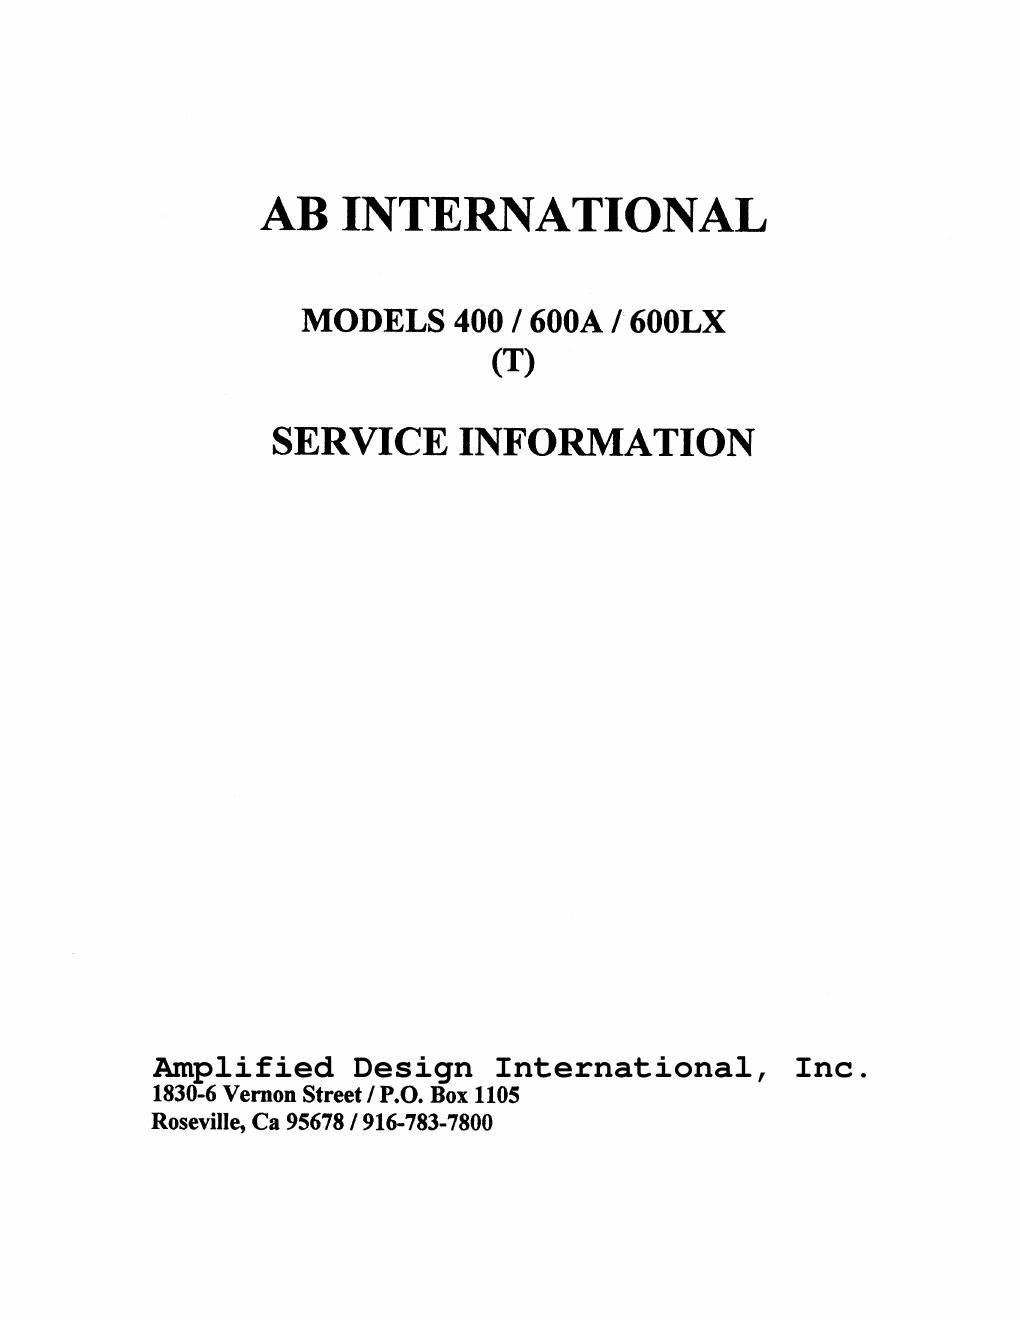 AB International 400 600A 600LX Service Manual